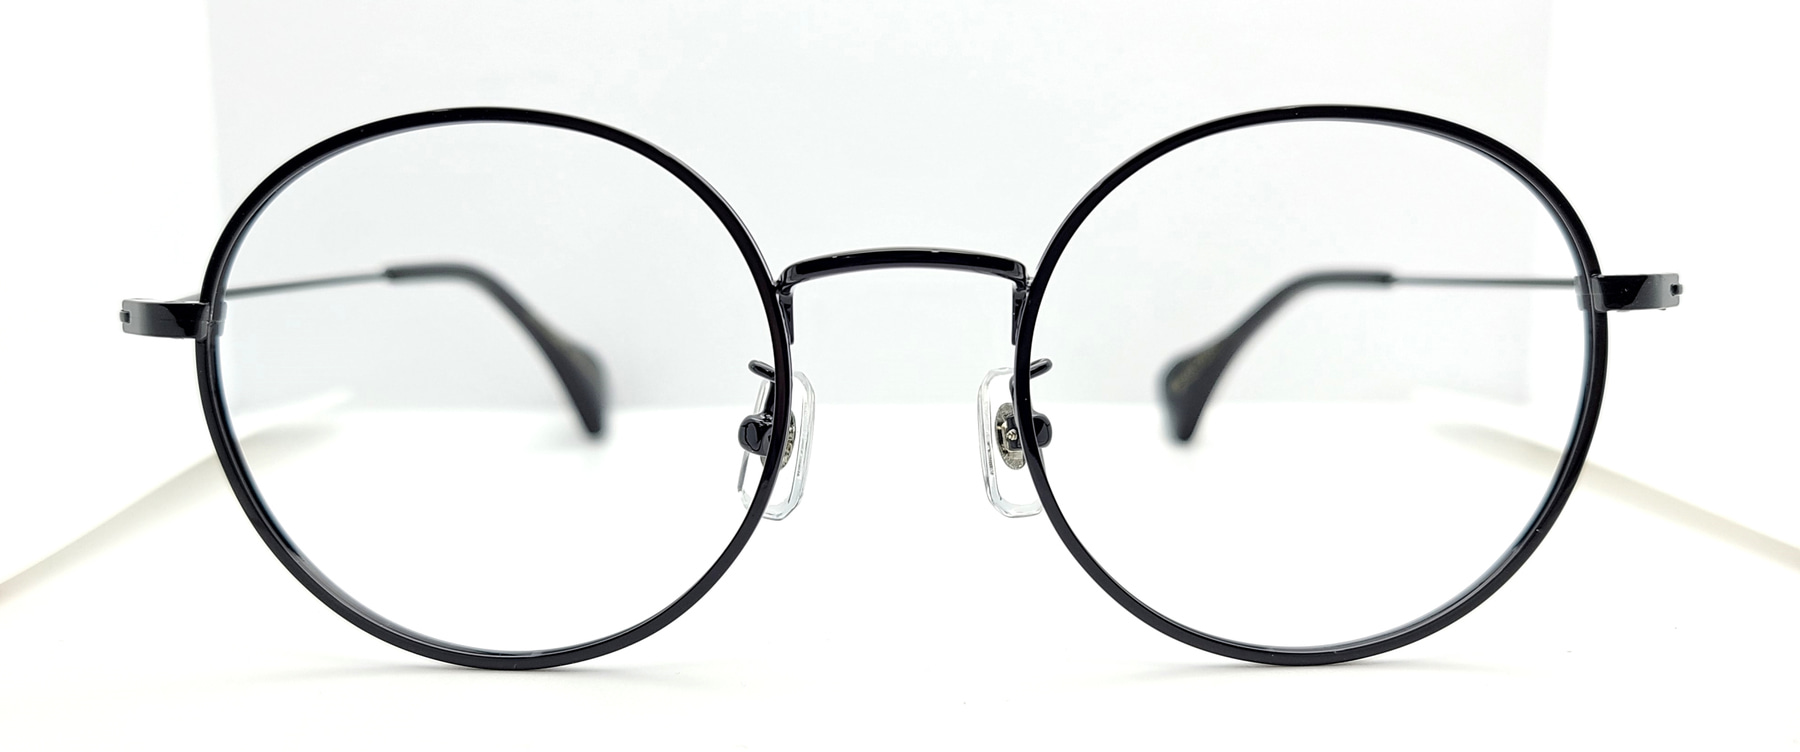 MINIHOUSE M-1420, Korean glasses, sunglasses, eyeglasses, glasses